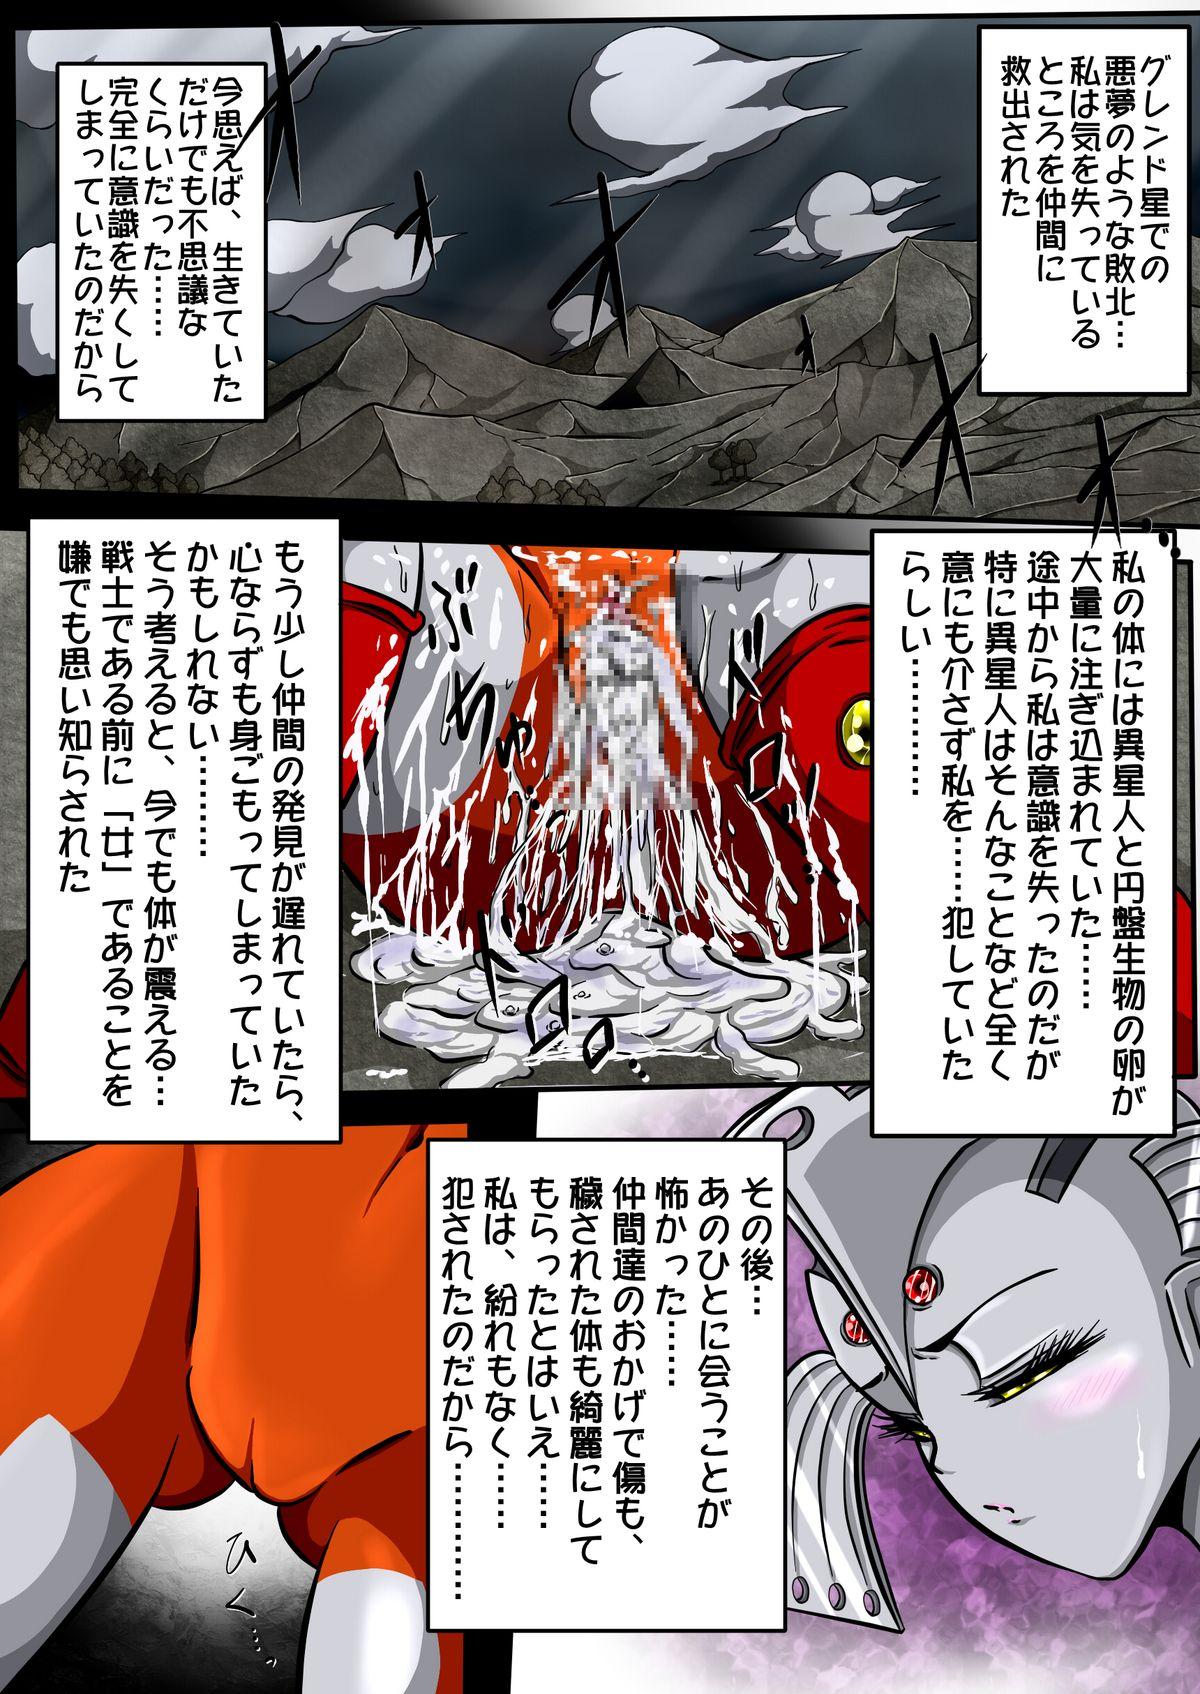 Lezdom Ultra Mairi Monogatari 2 - Shade no Erona Hon IV - Ultraman Menage - Page 5